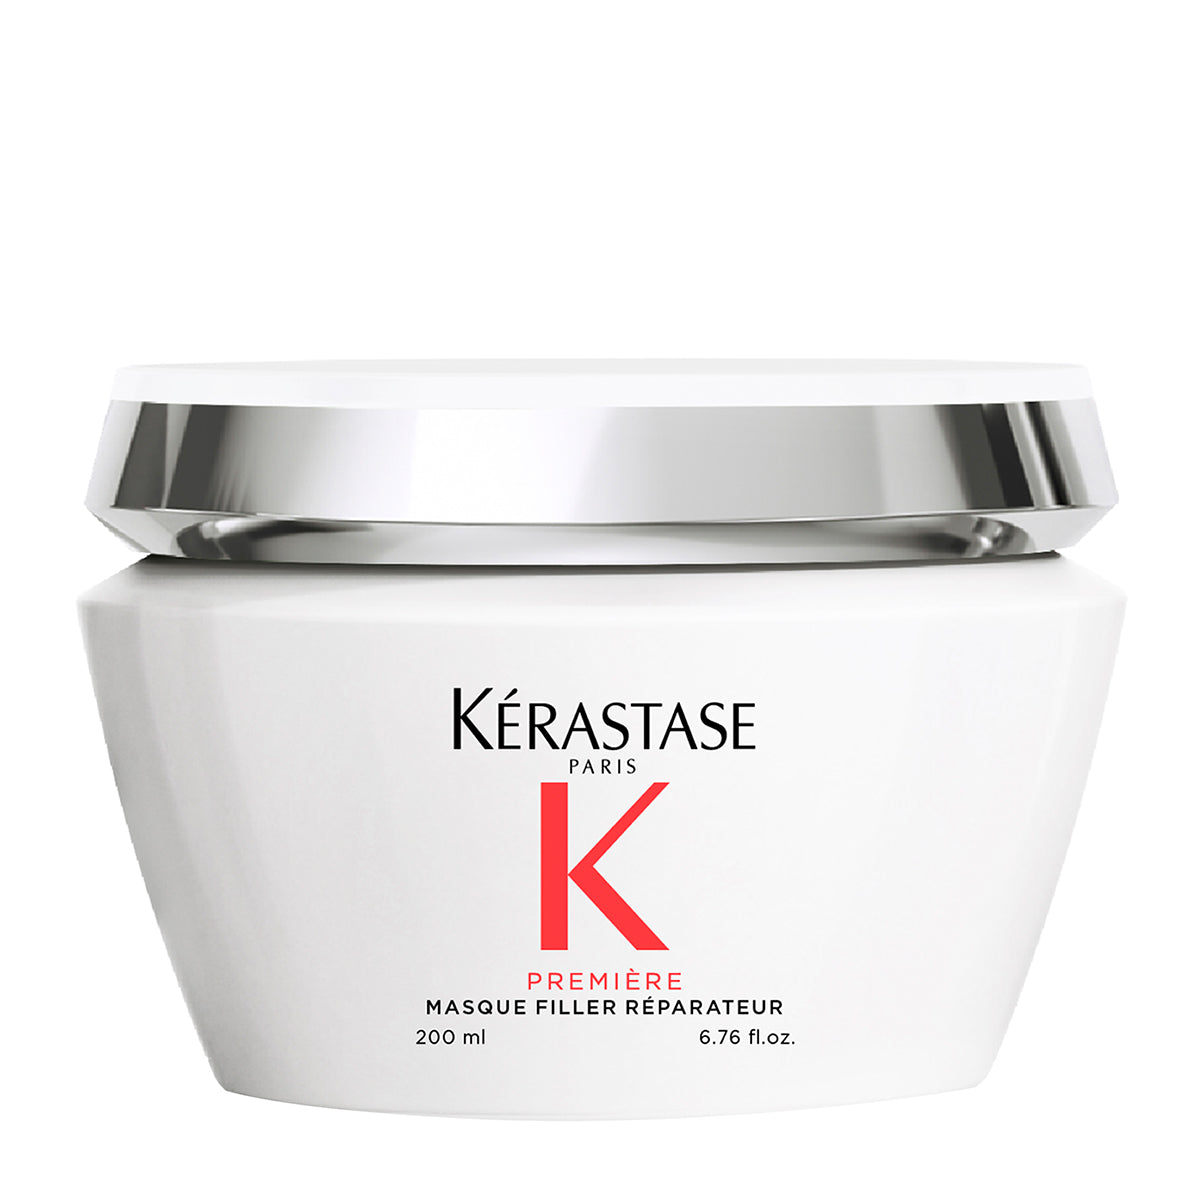 Kerastase Premiere Μάσκα Filler Reparateur για Ταλαιπωρημένα Μαλλιά 200ml